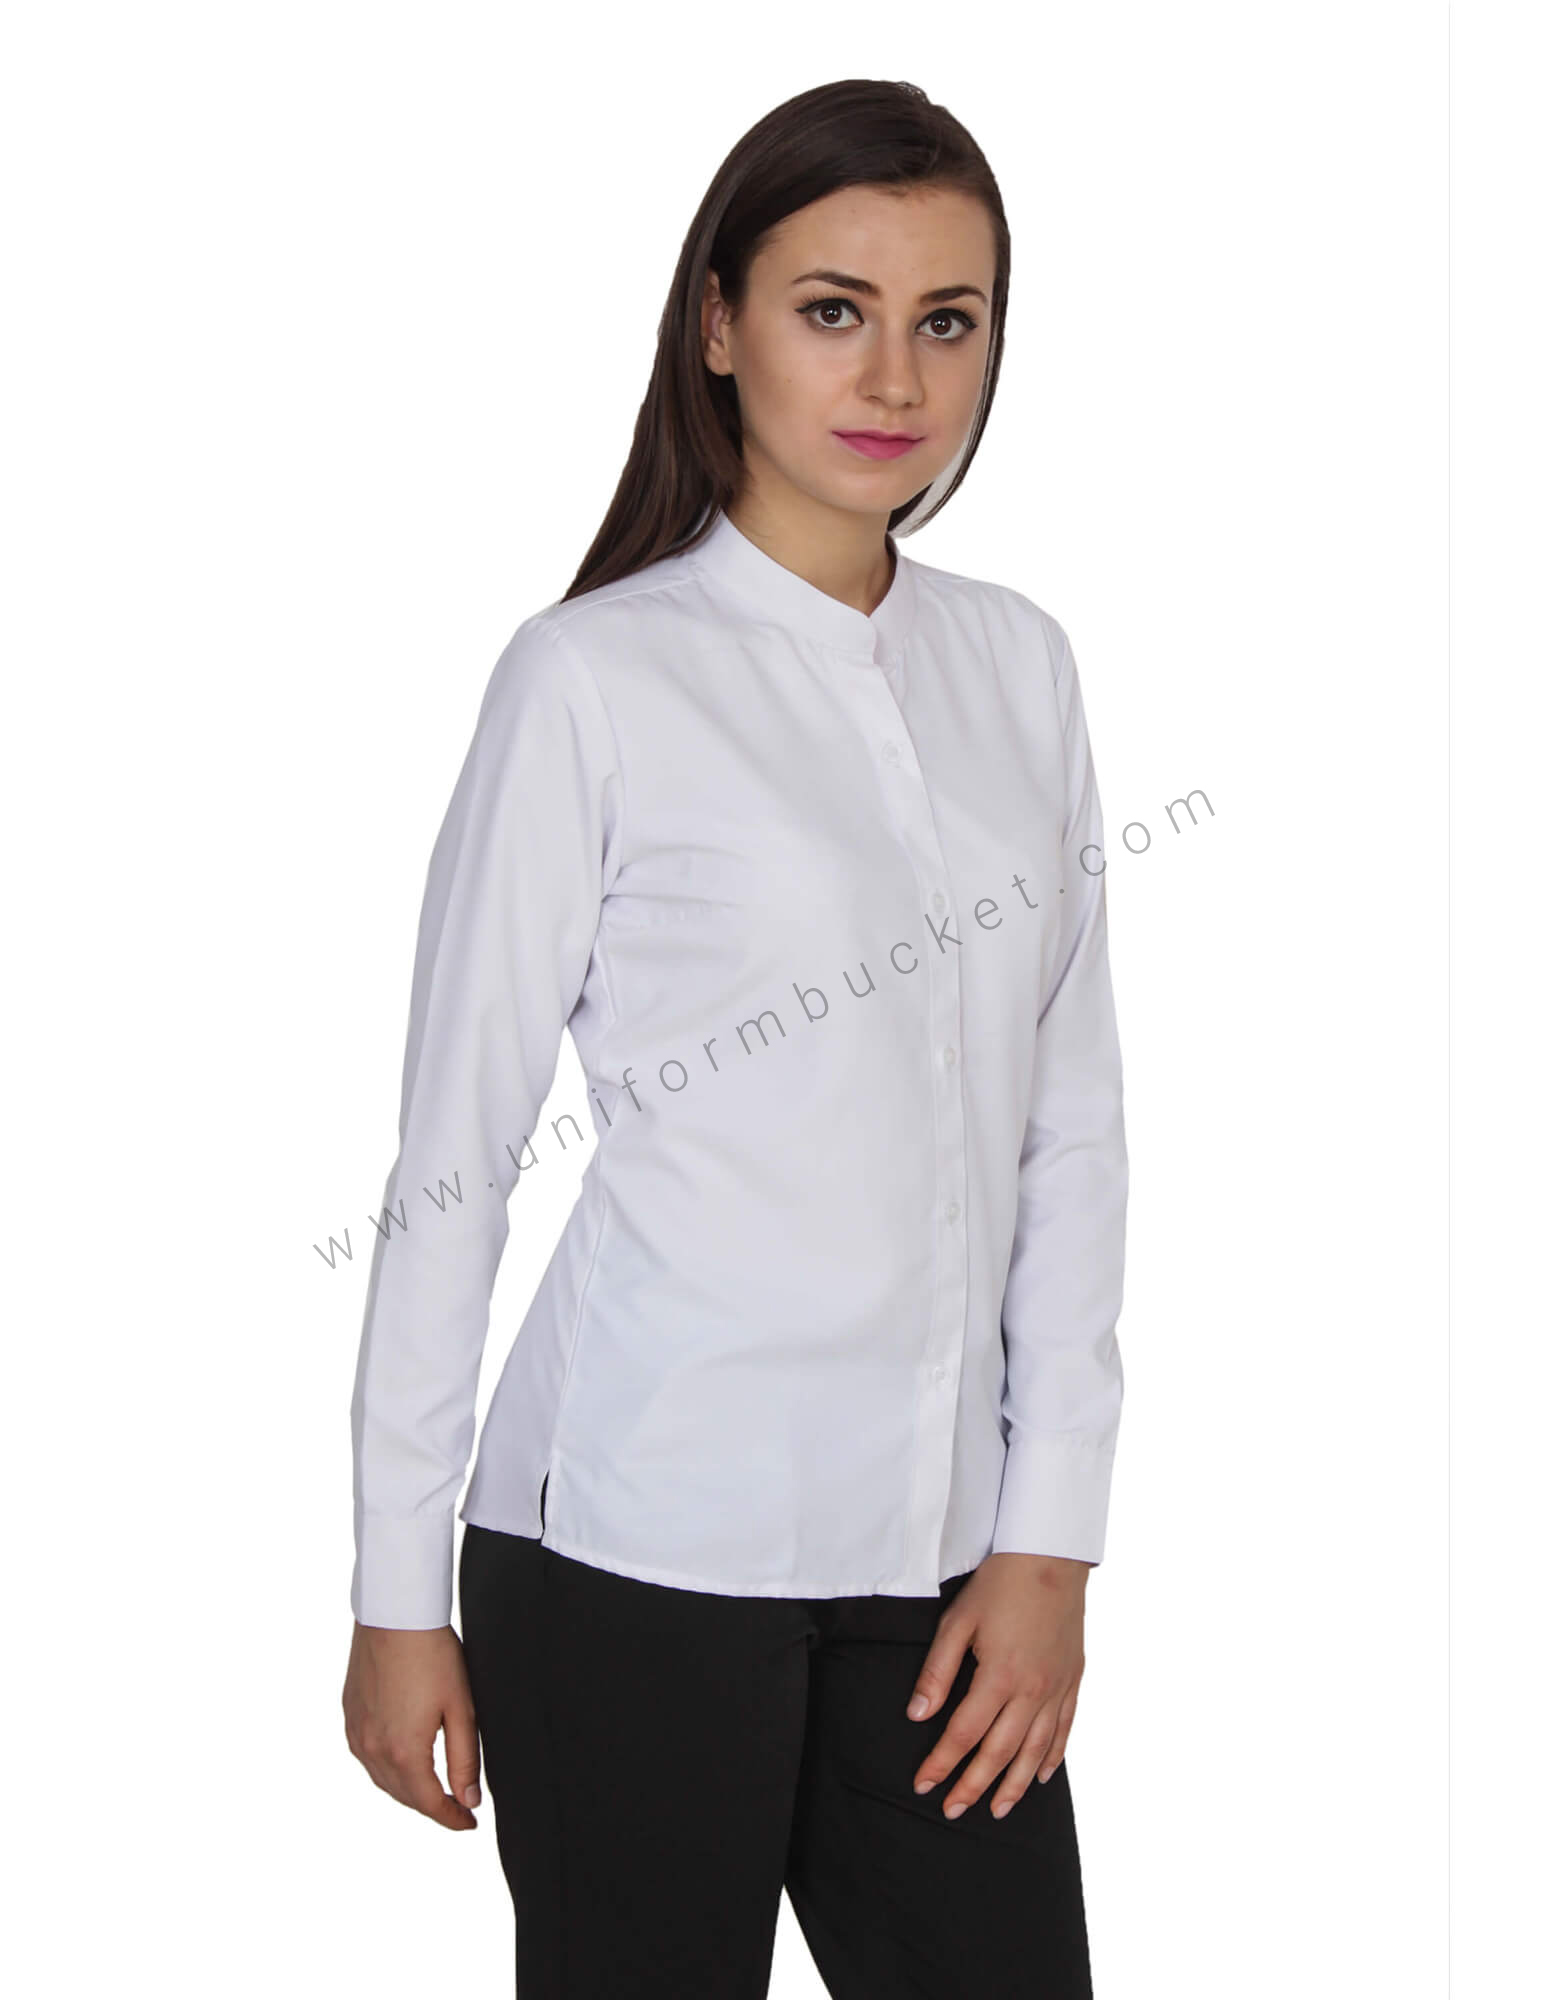 Formal White Uniform Shirt